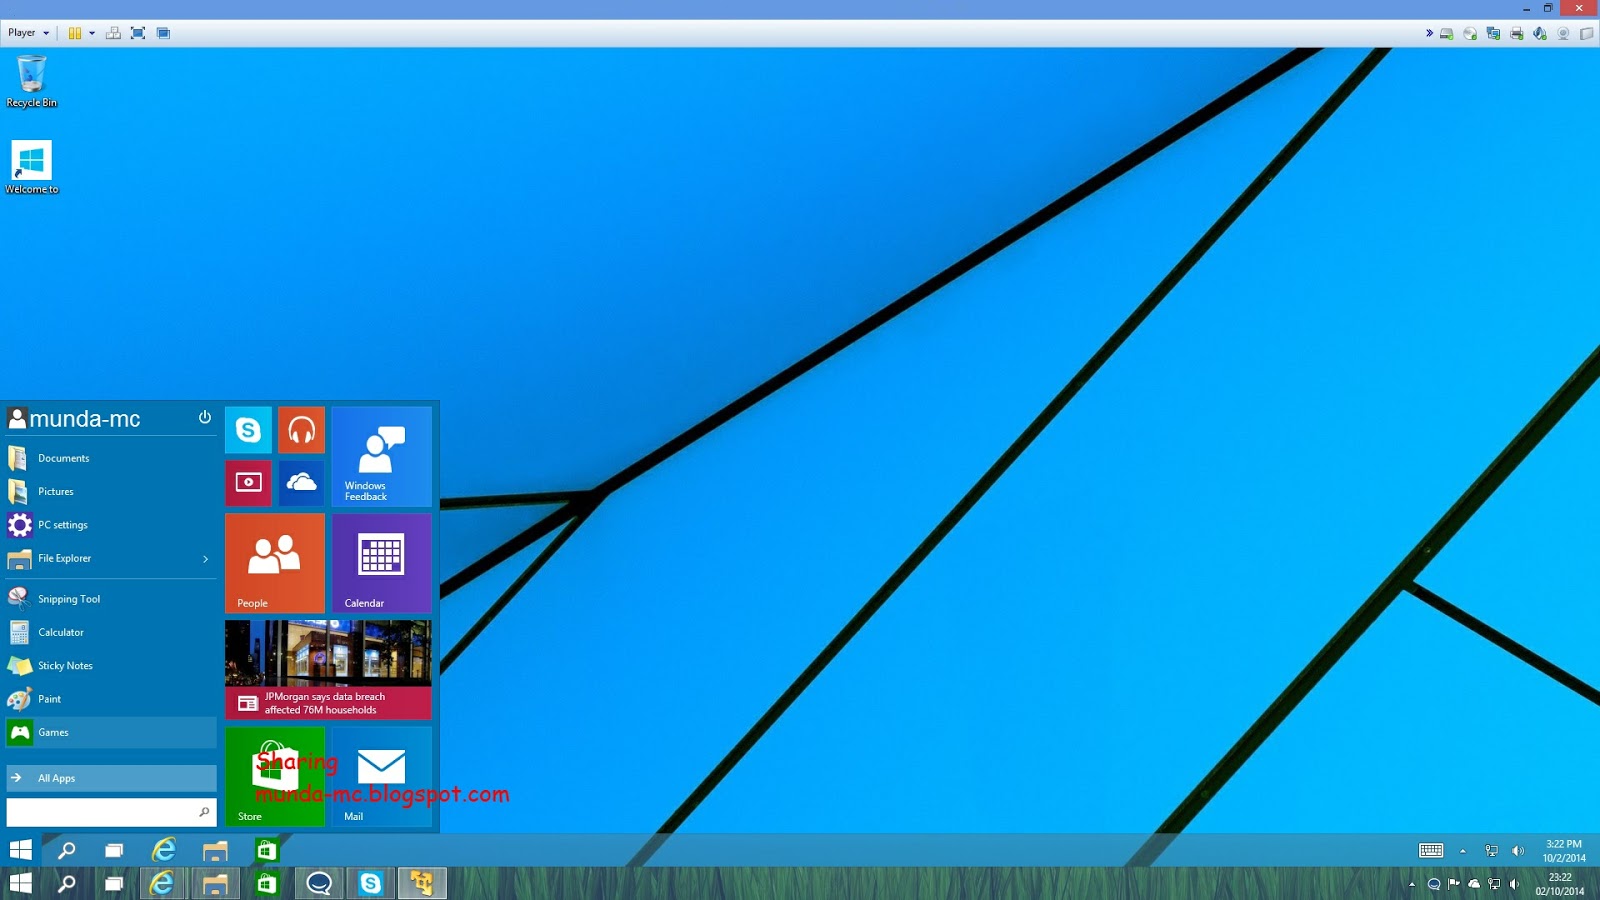 windows 10 pro 64 bit iso download full version